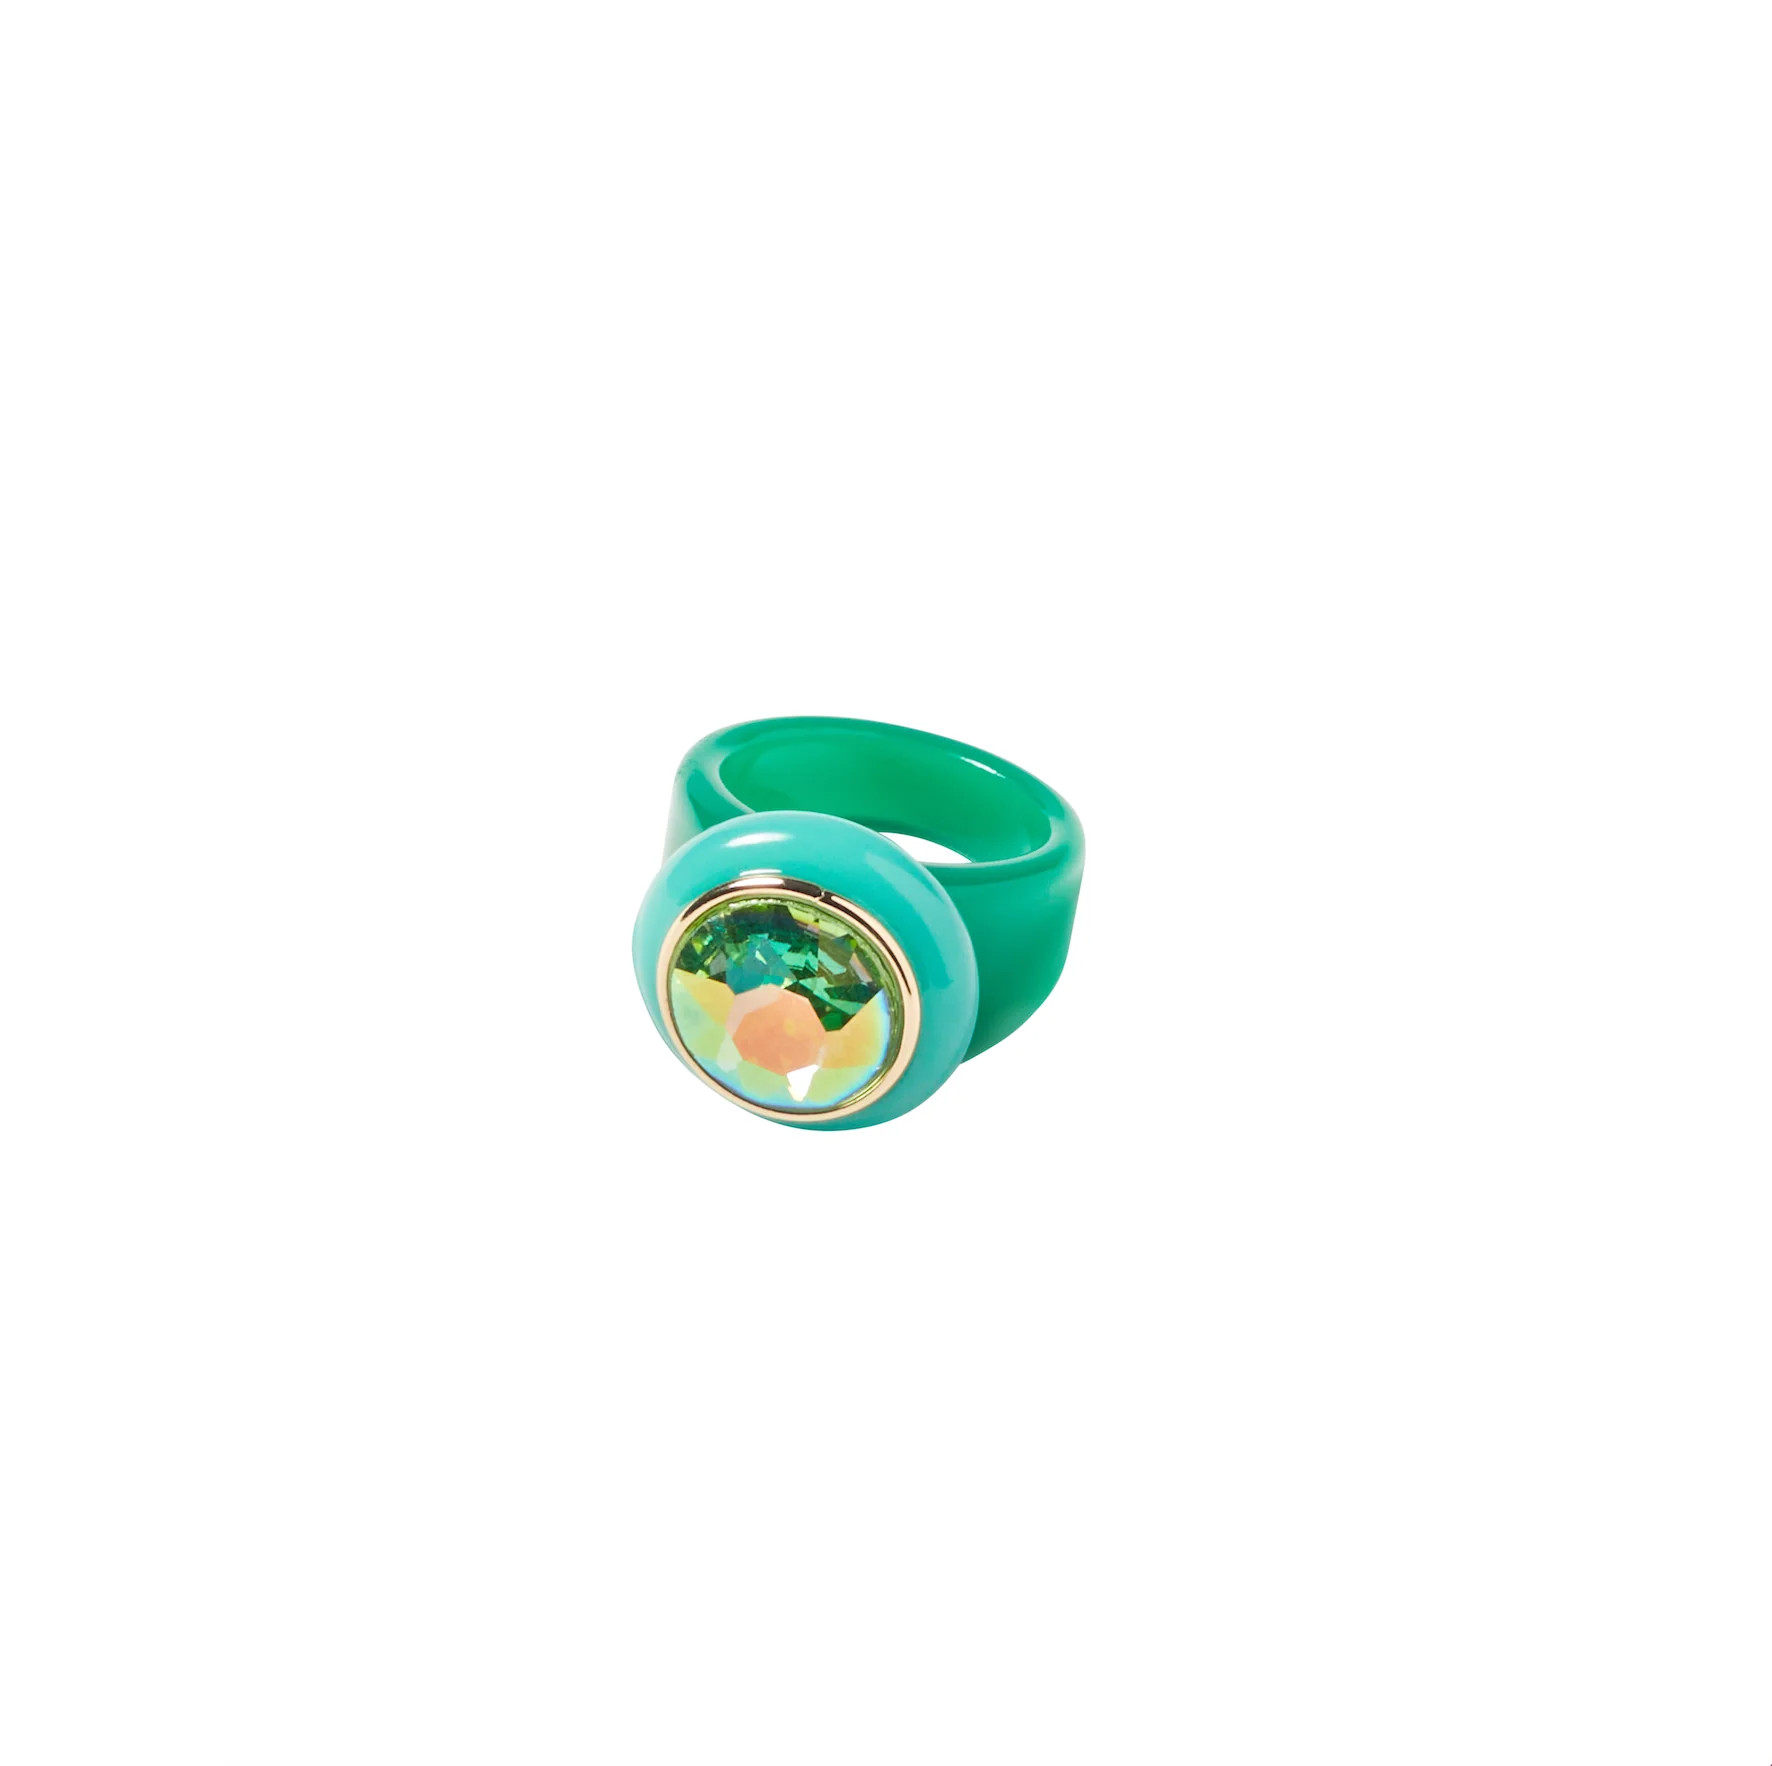 City Girl Ring - Aqua Marine | Smith & Co. Jewelry